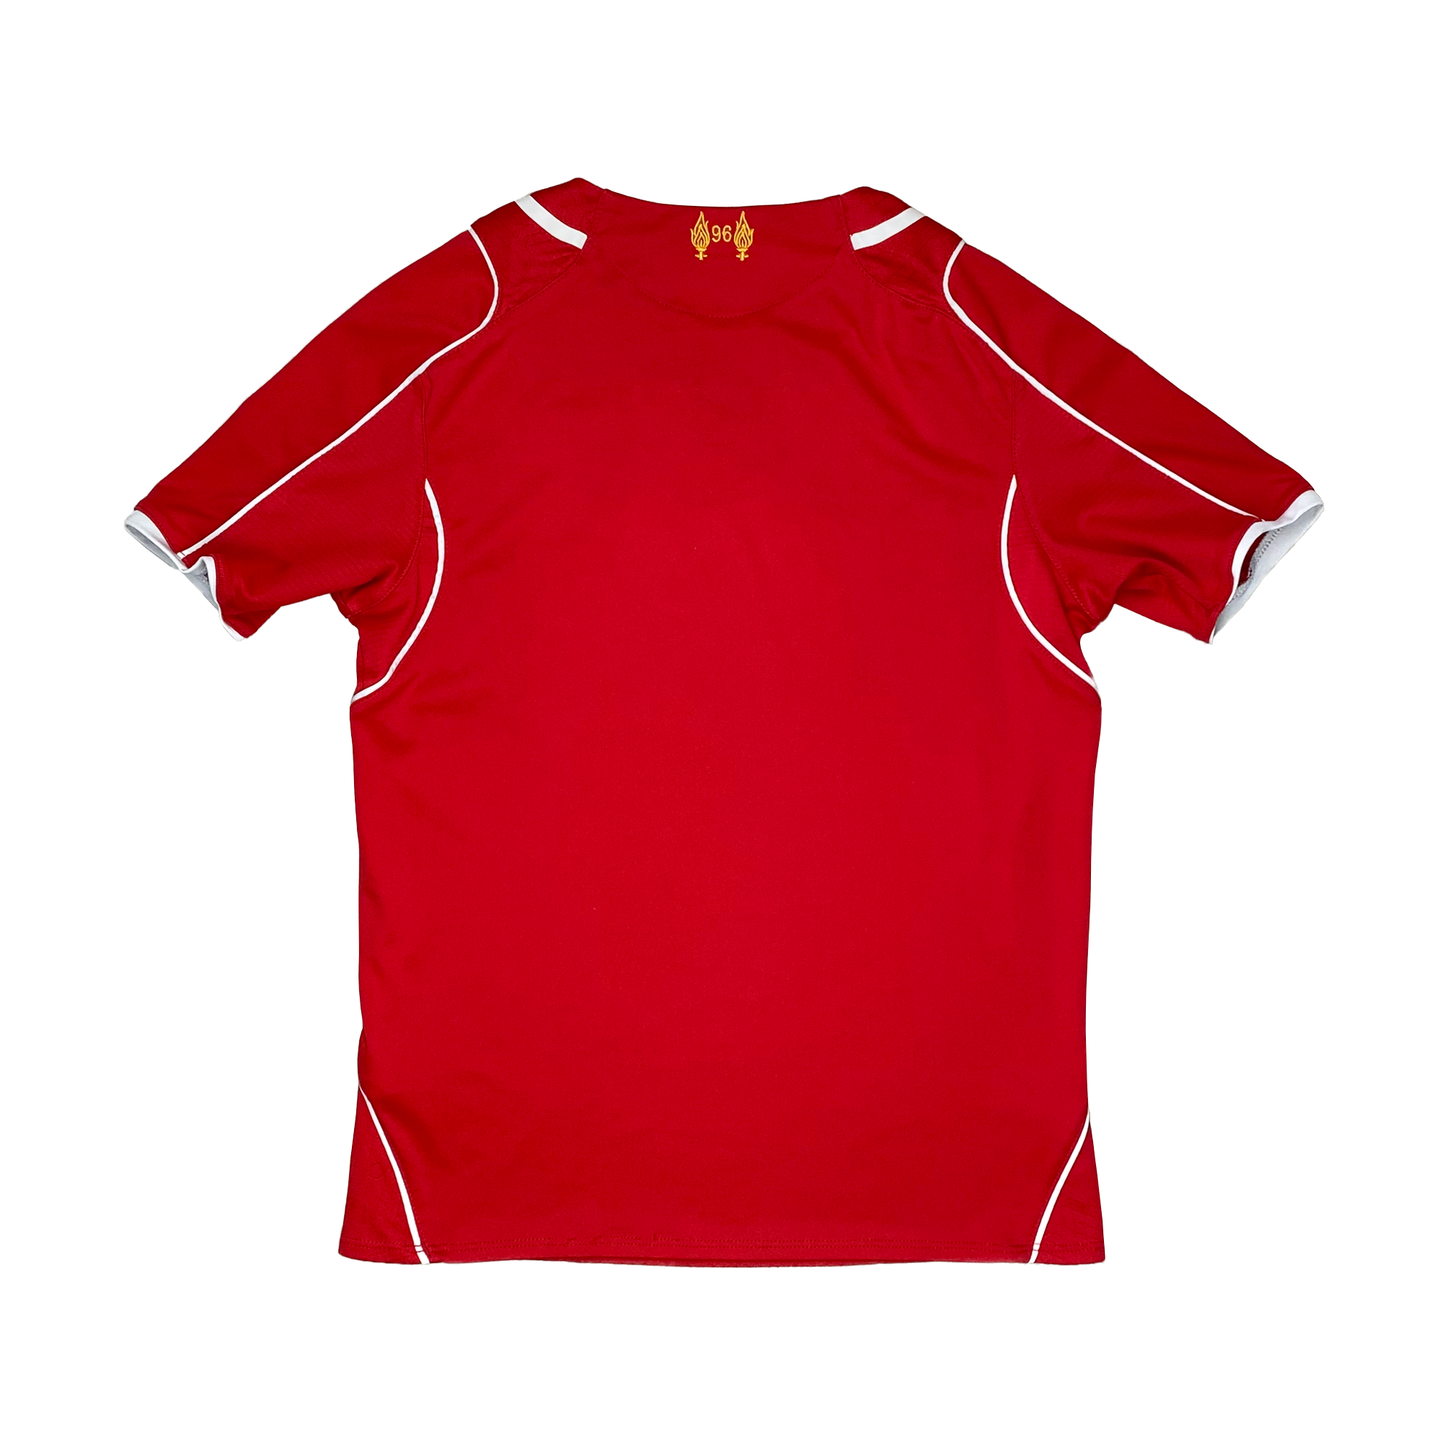 Liverpool Home Shirt (2014-15) - 7/8 Years